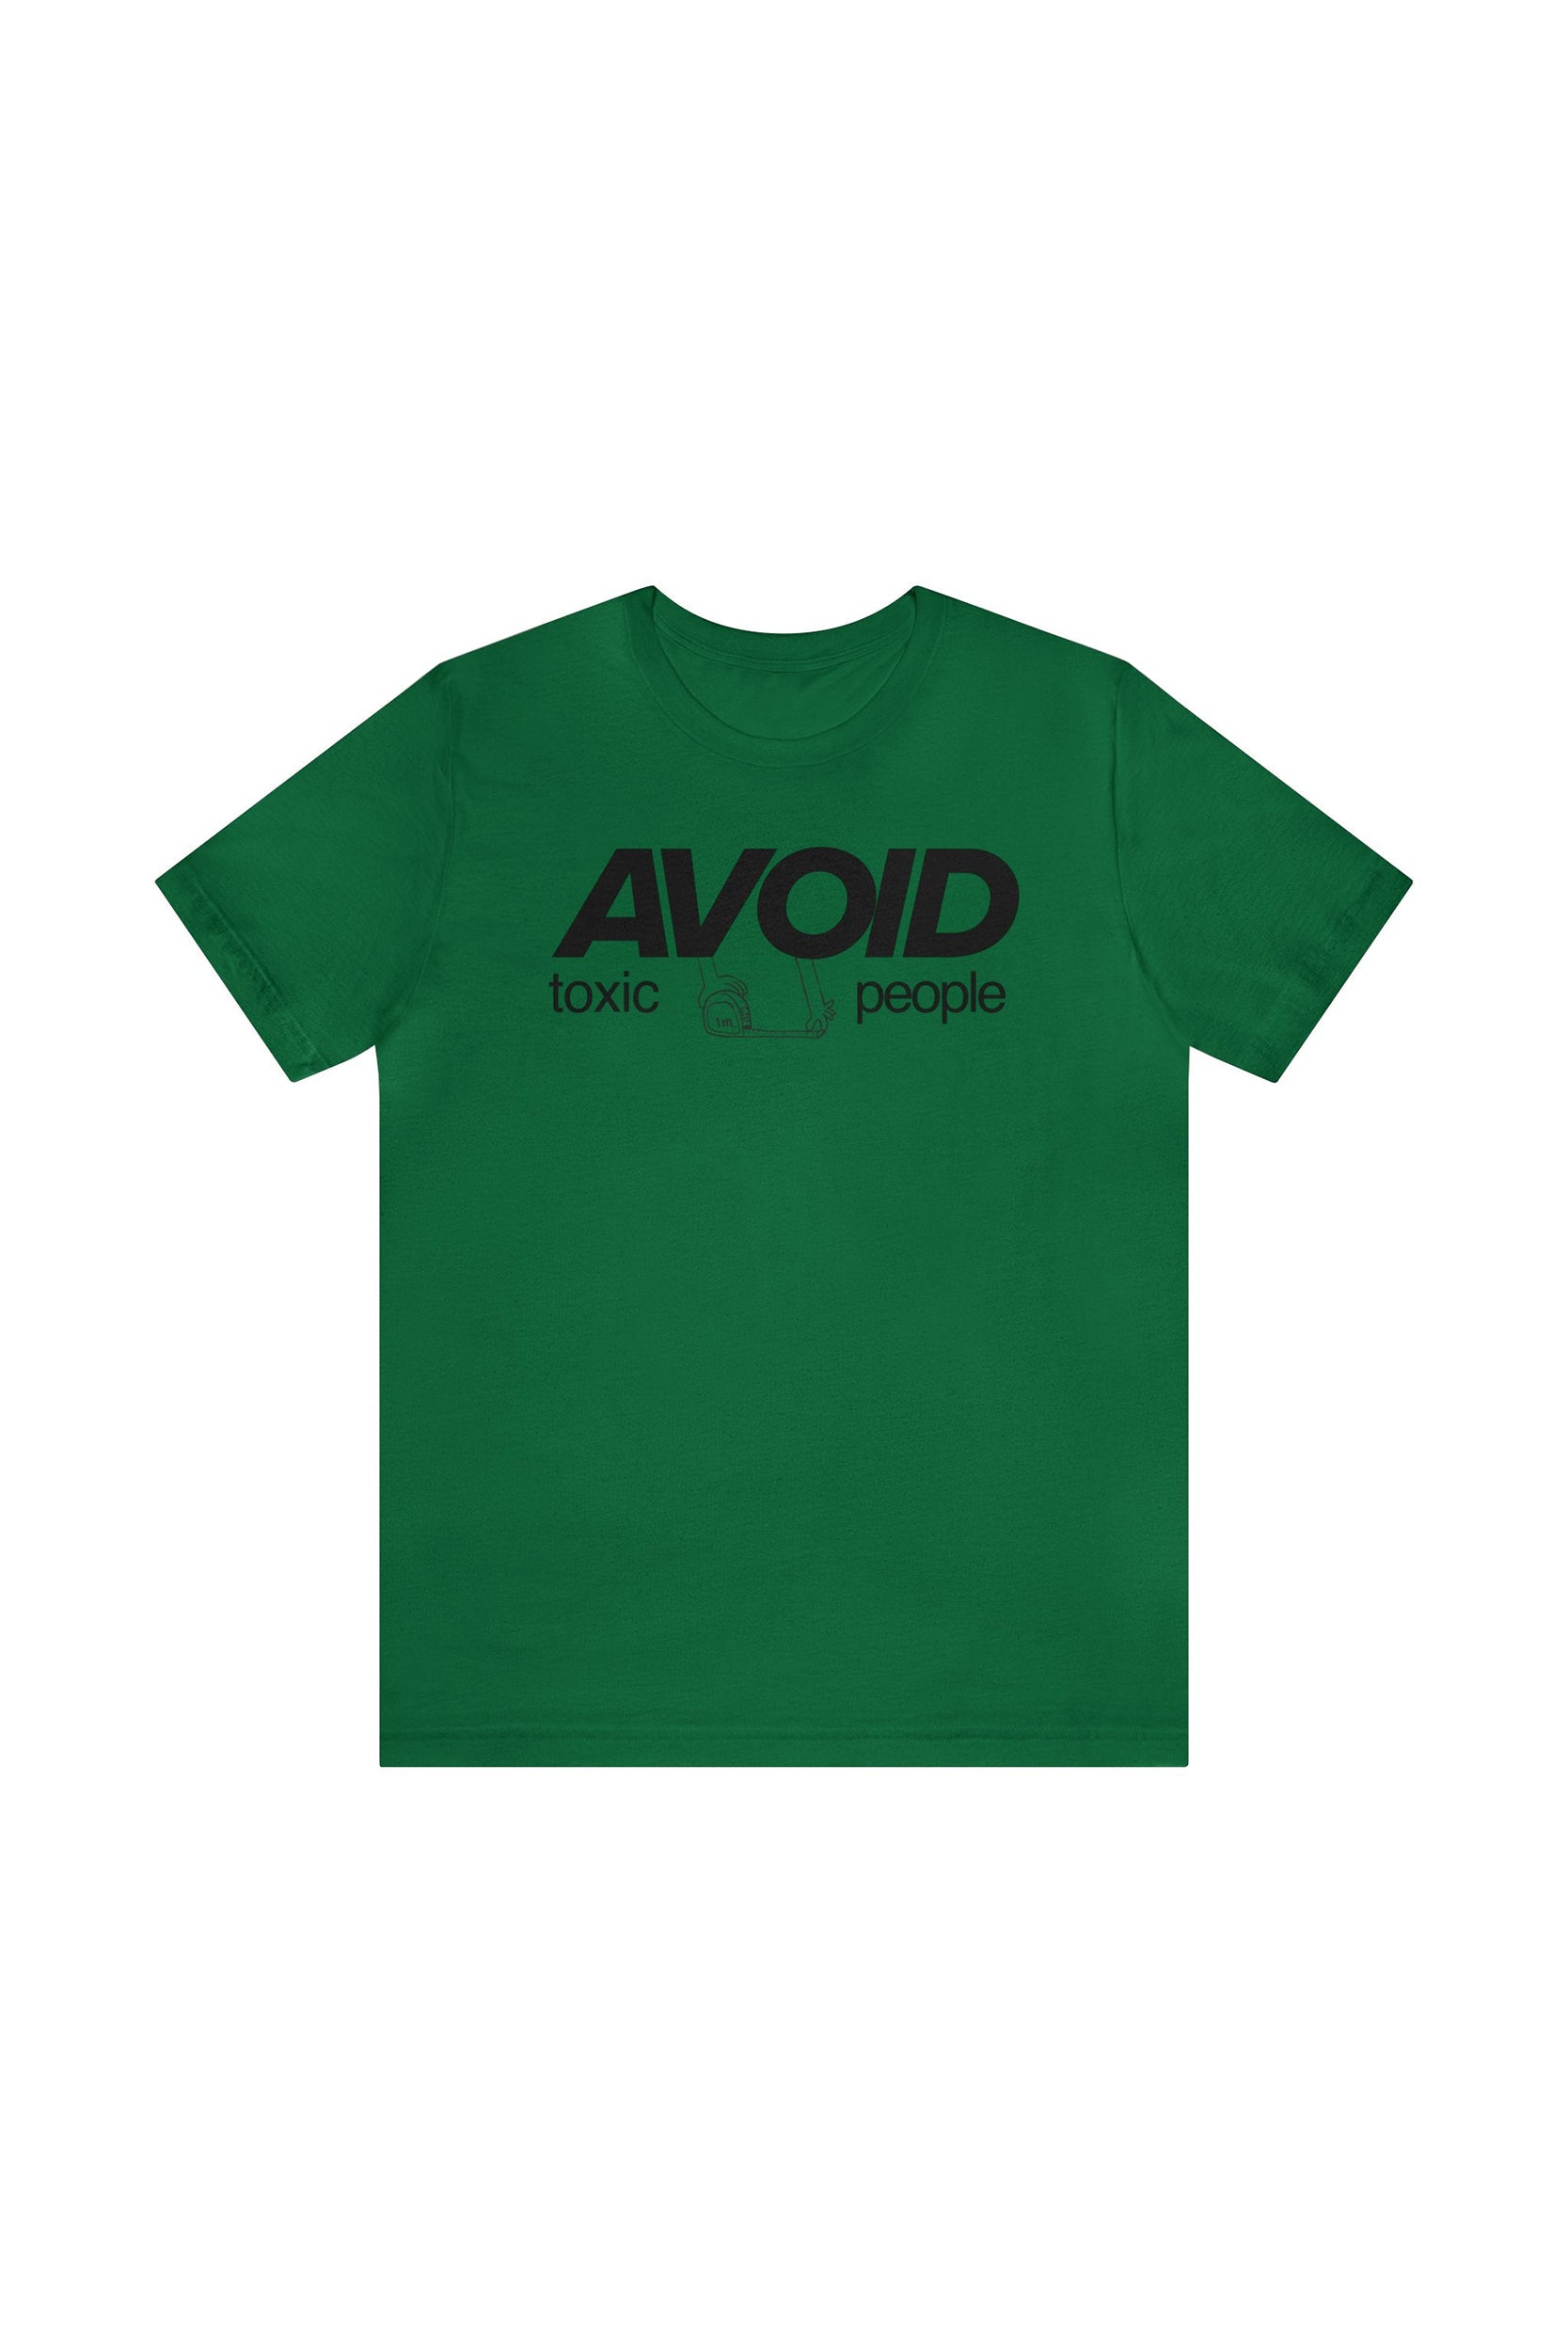 "AVOID toxic people" T-Shirt